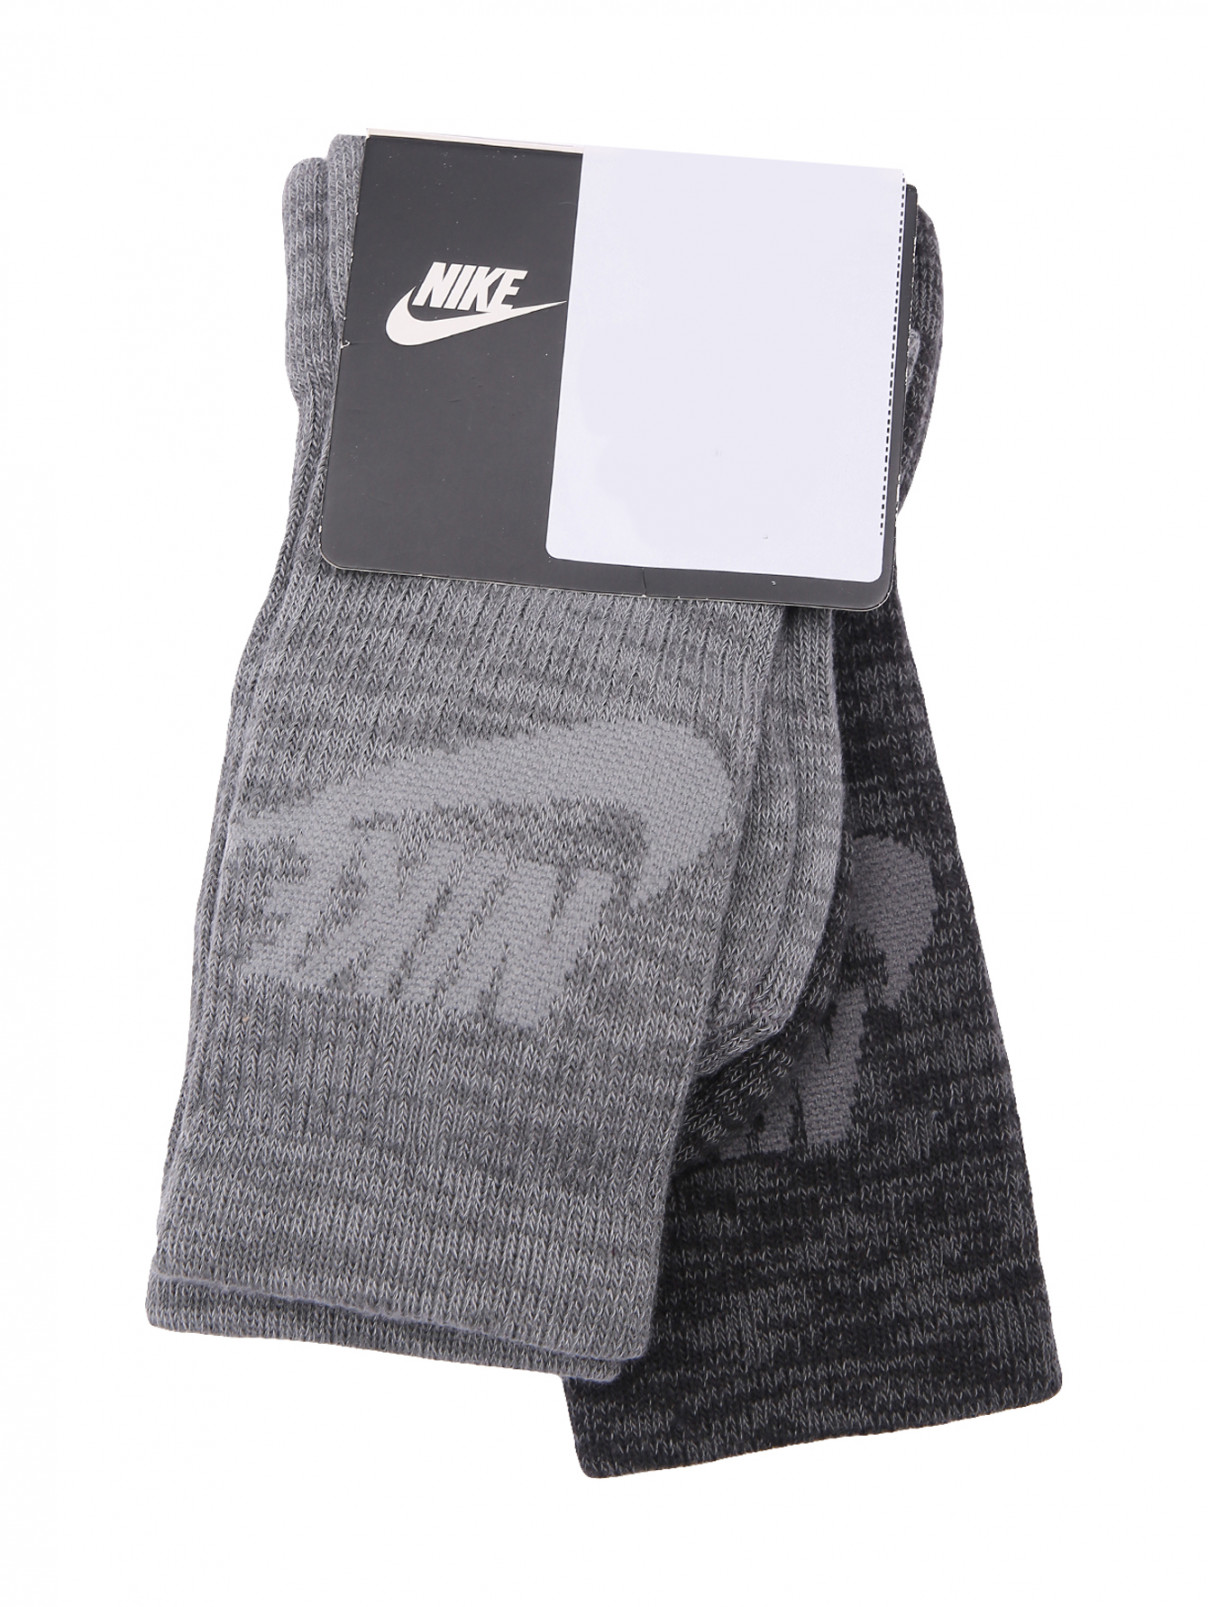 Носки с узором Nike  –  Общий вид  – Цвет:  Узор